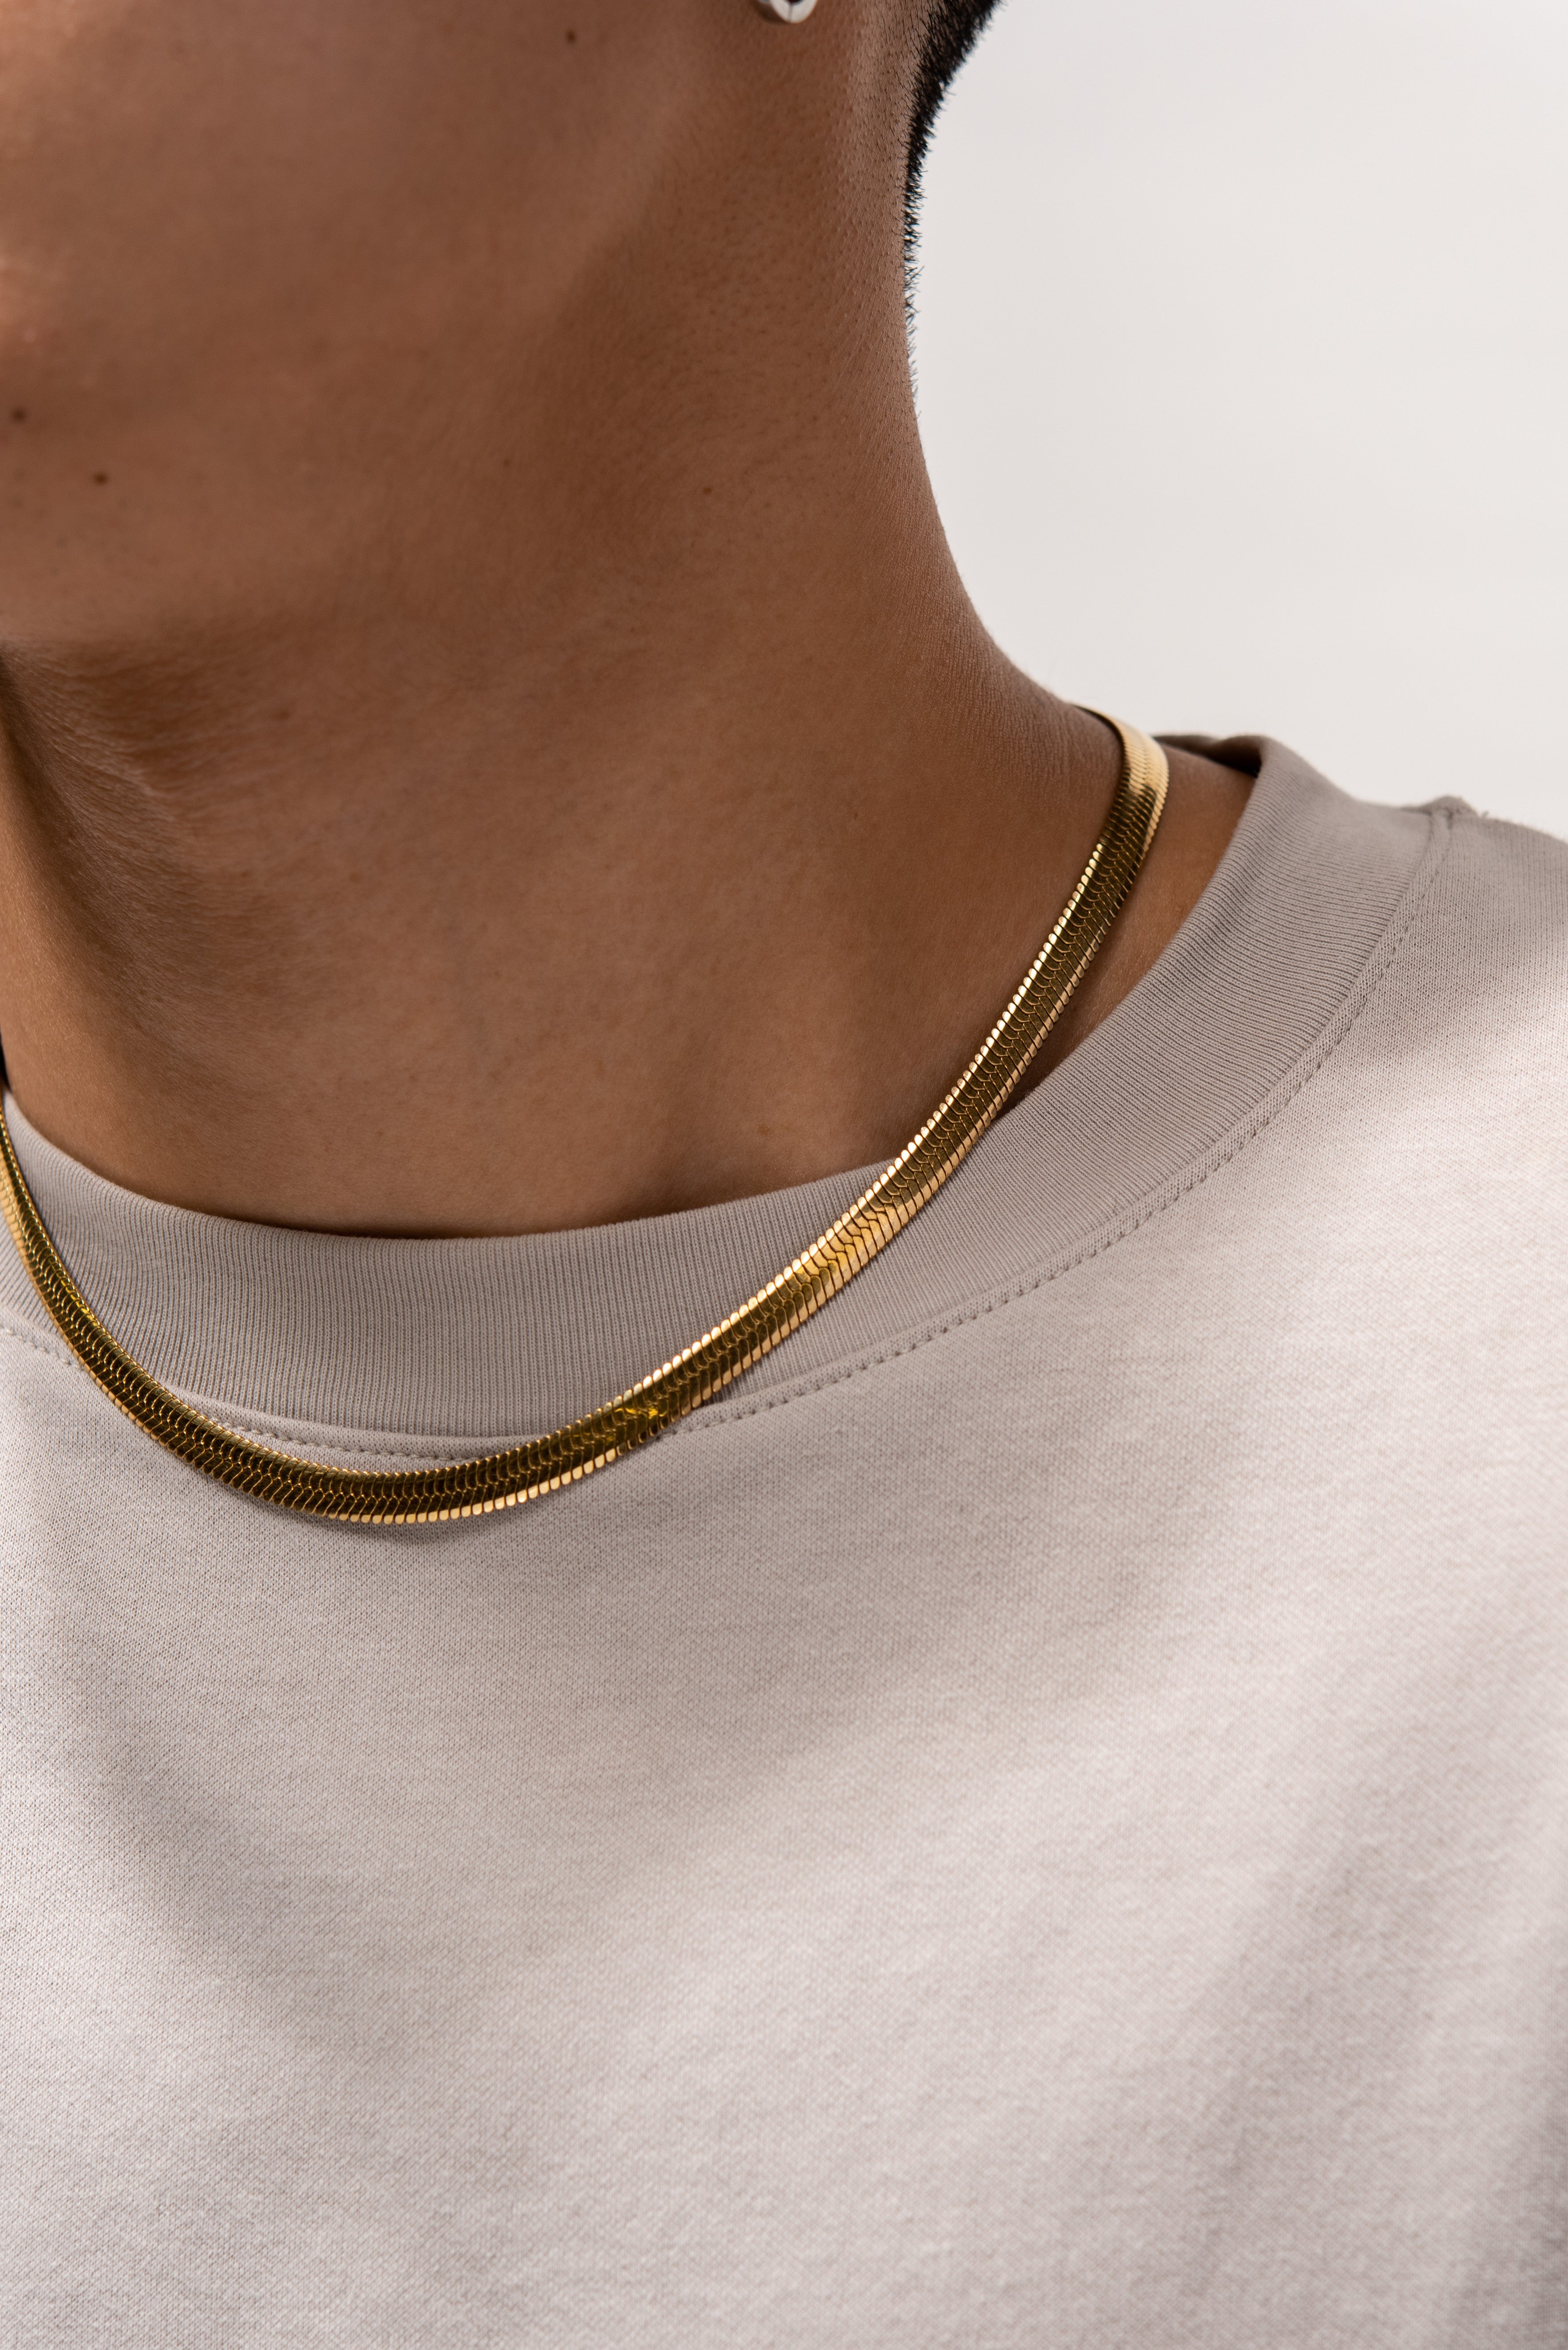 10MM Gold Herringbone Snake Chain Gold Herringbone Necklace For Women And  Men Hip Hop Fashion Jewelry Gift From Shaziba, $12.1 | DHgate.Com